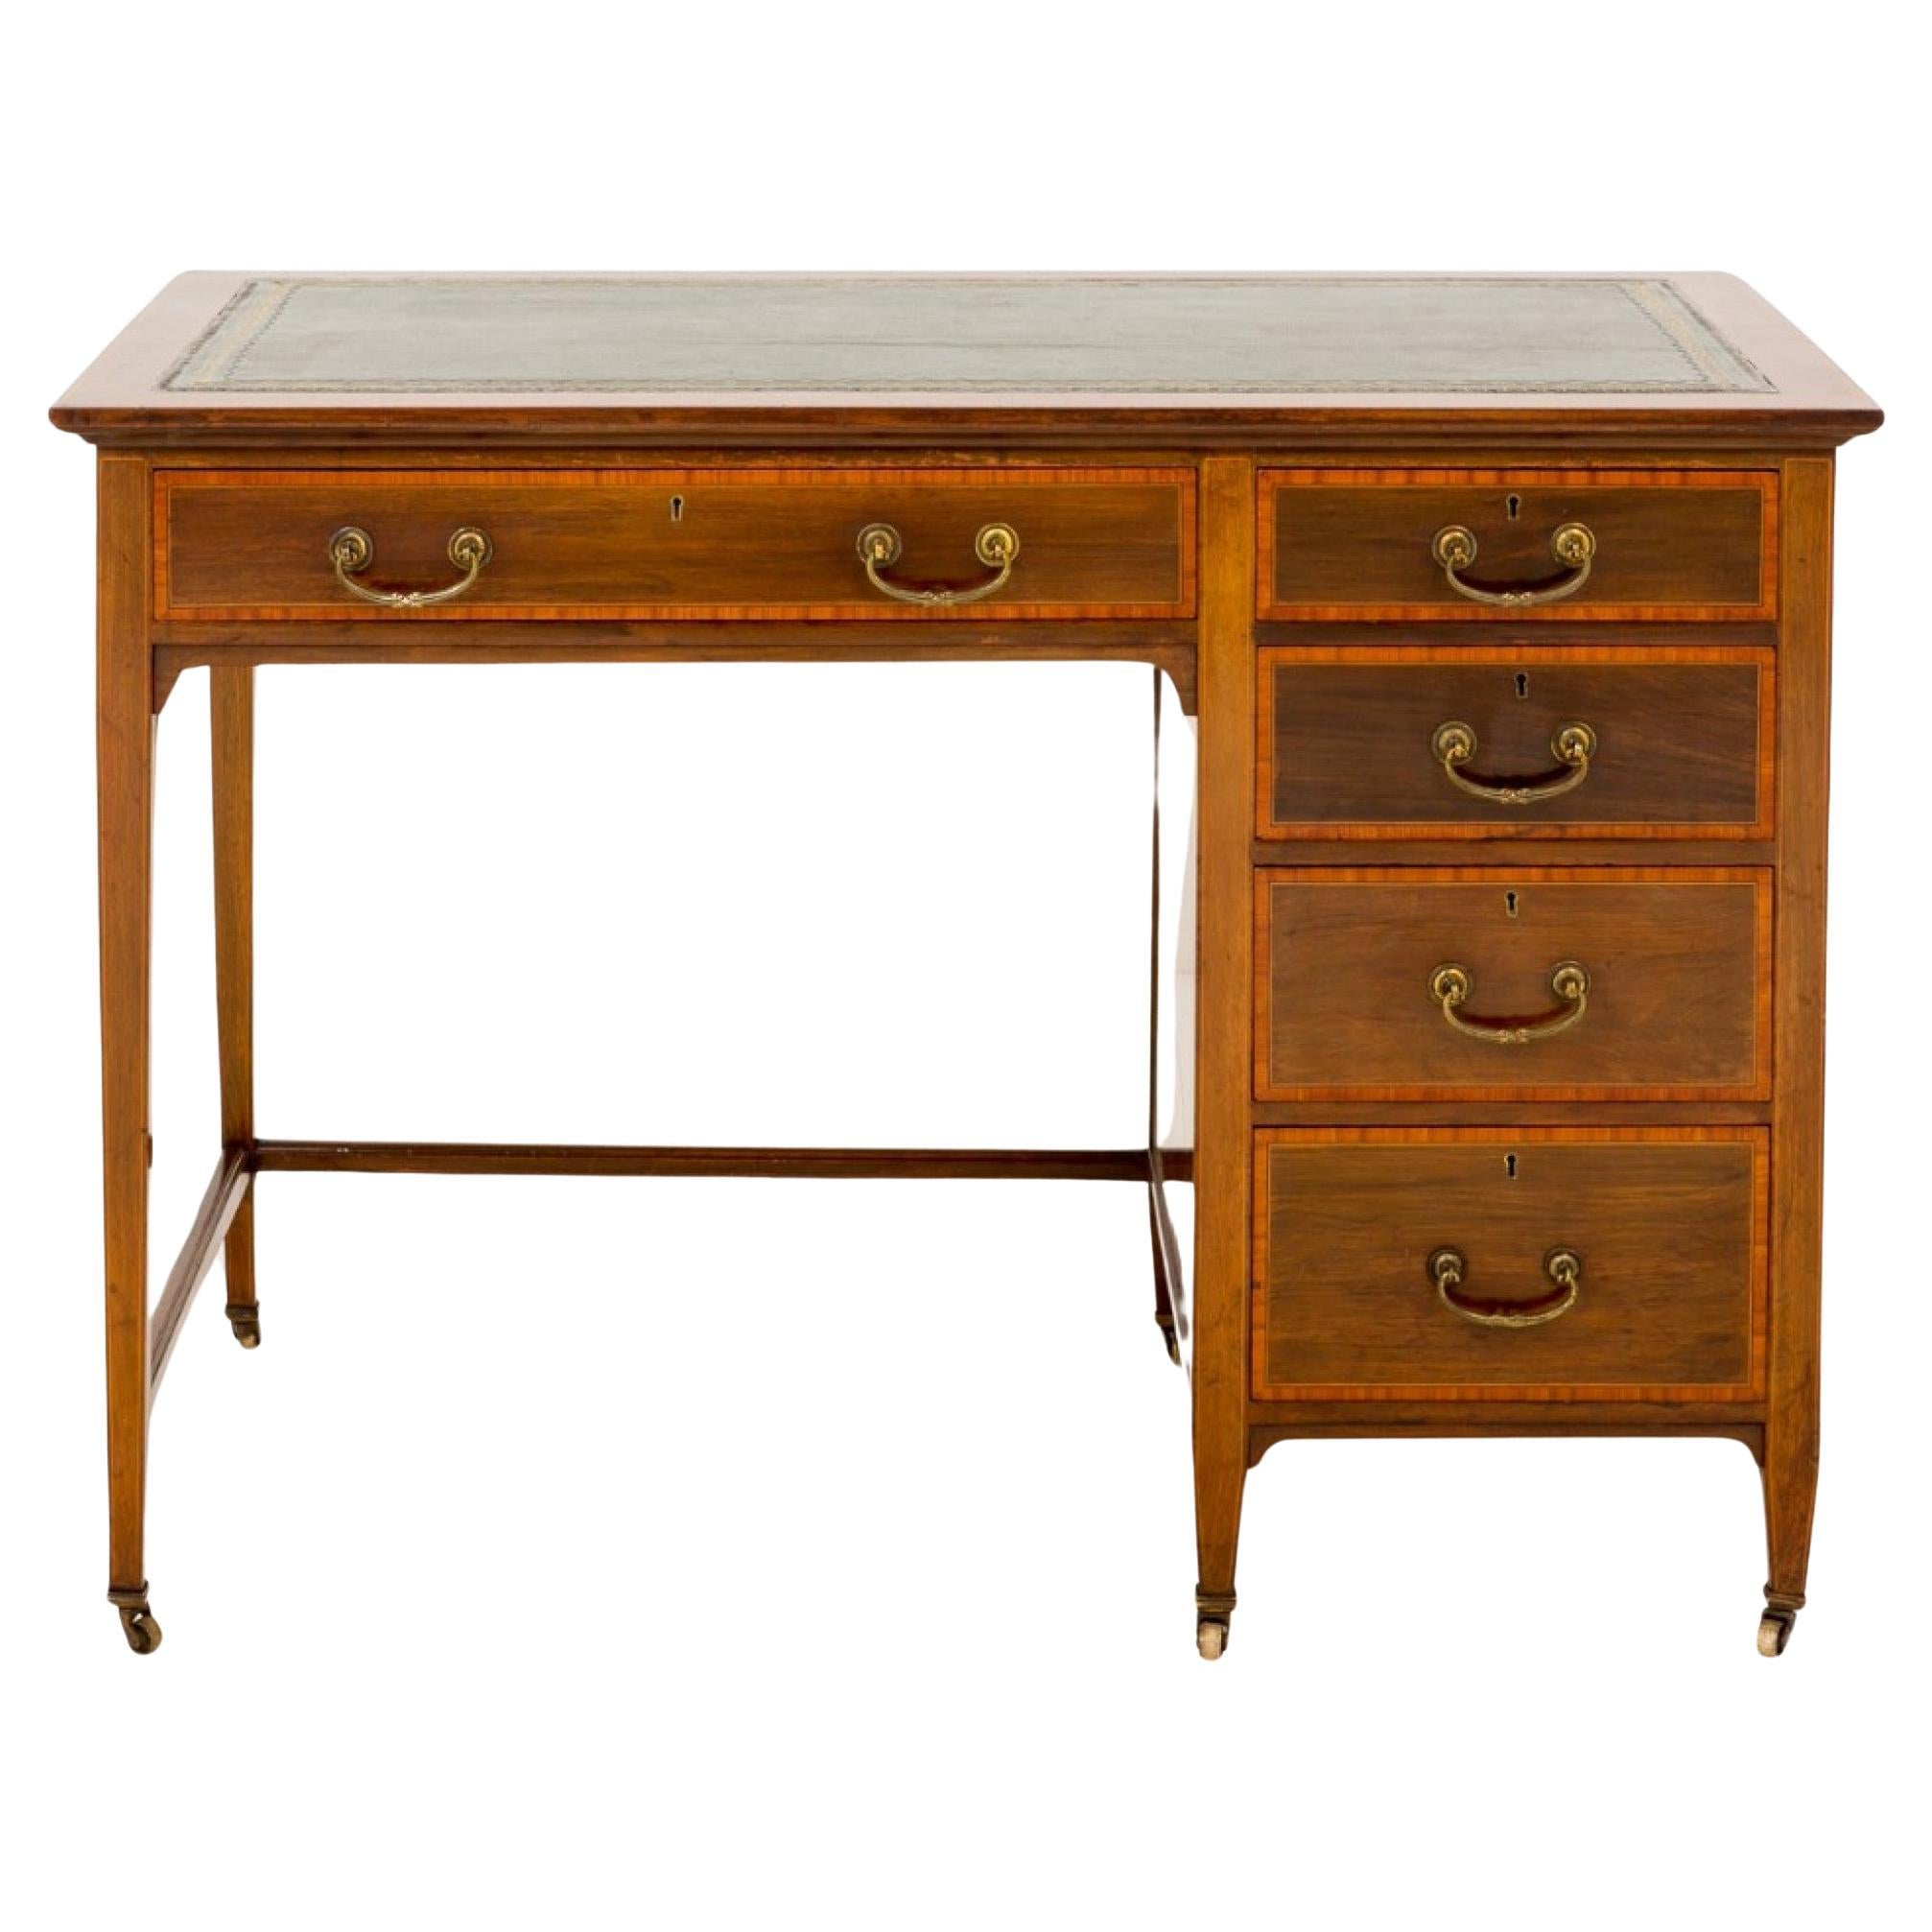 Sheraton Mahogany Desk - Antique Revival Desks Circa 1890